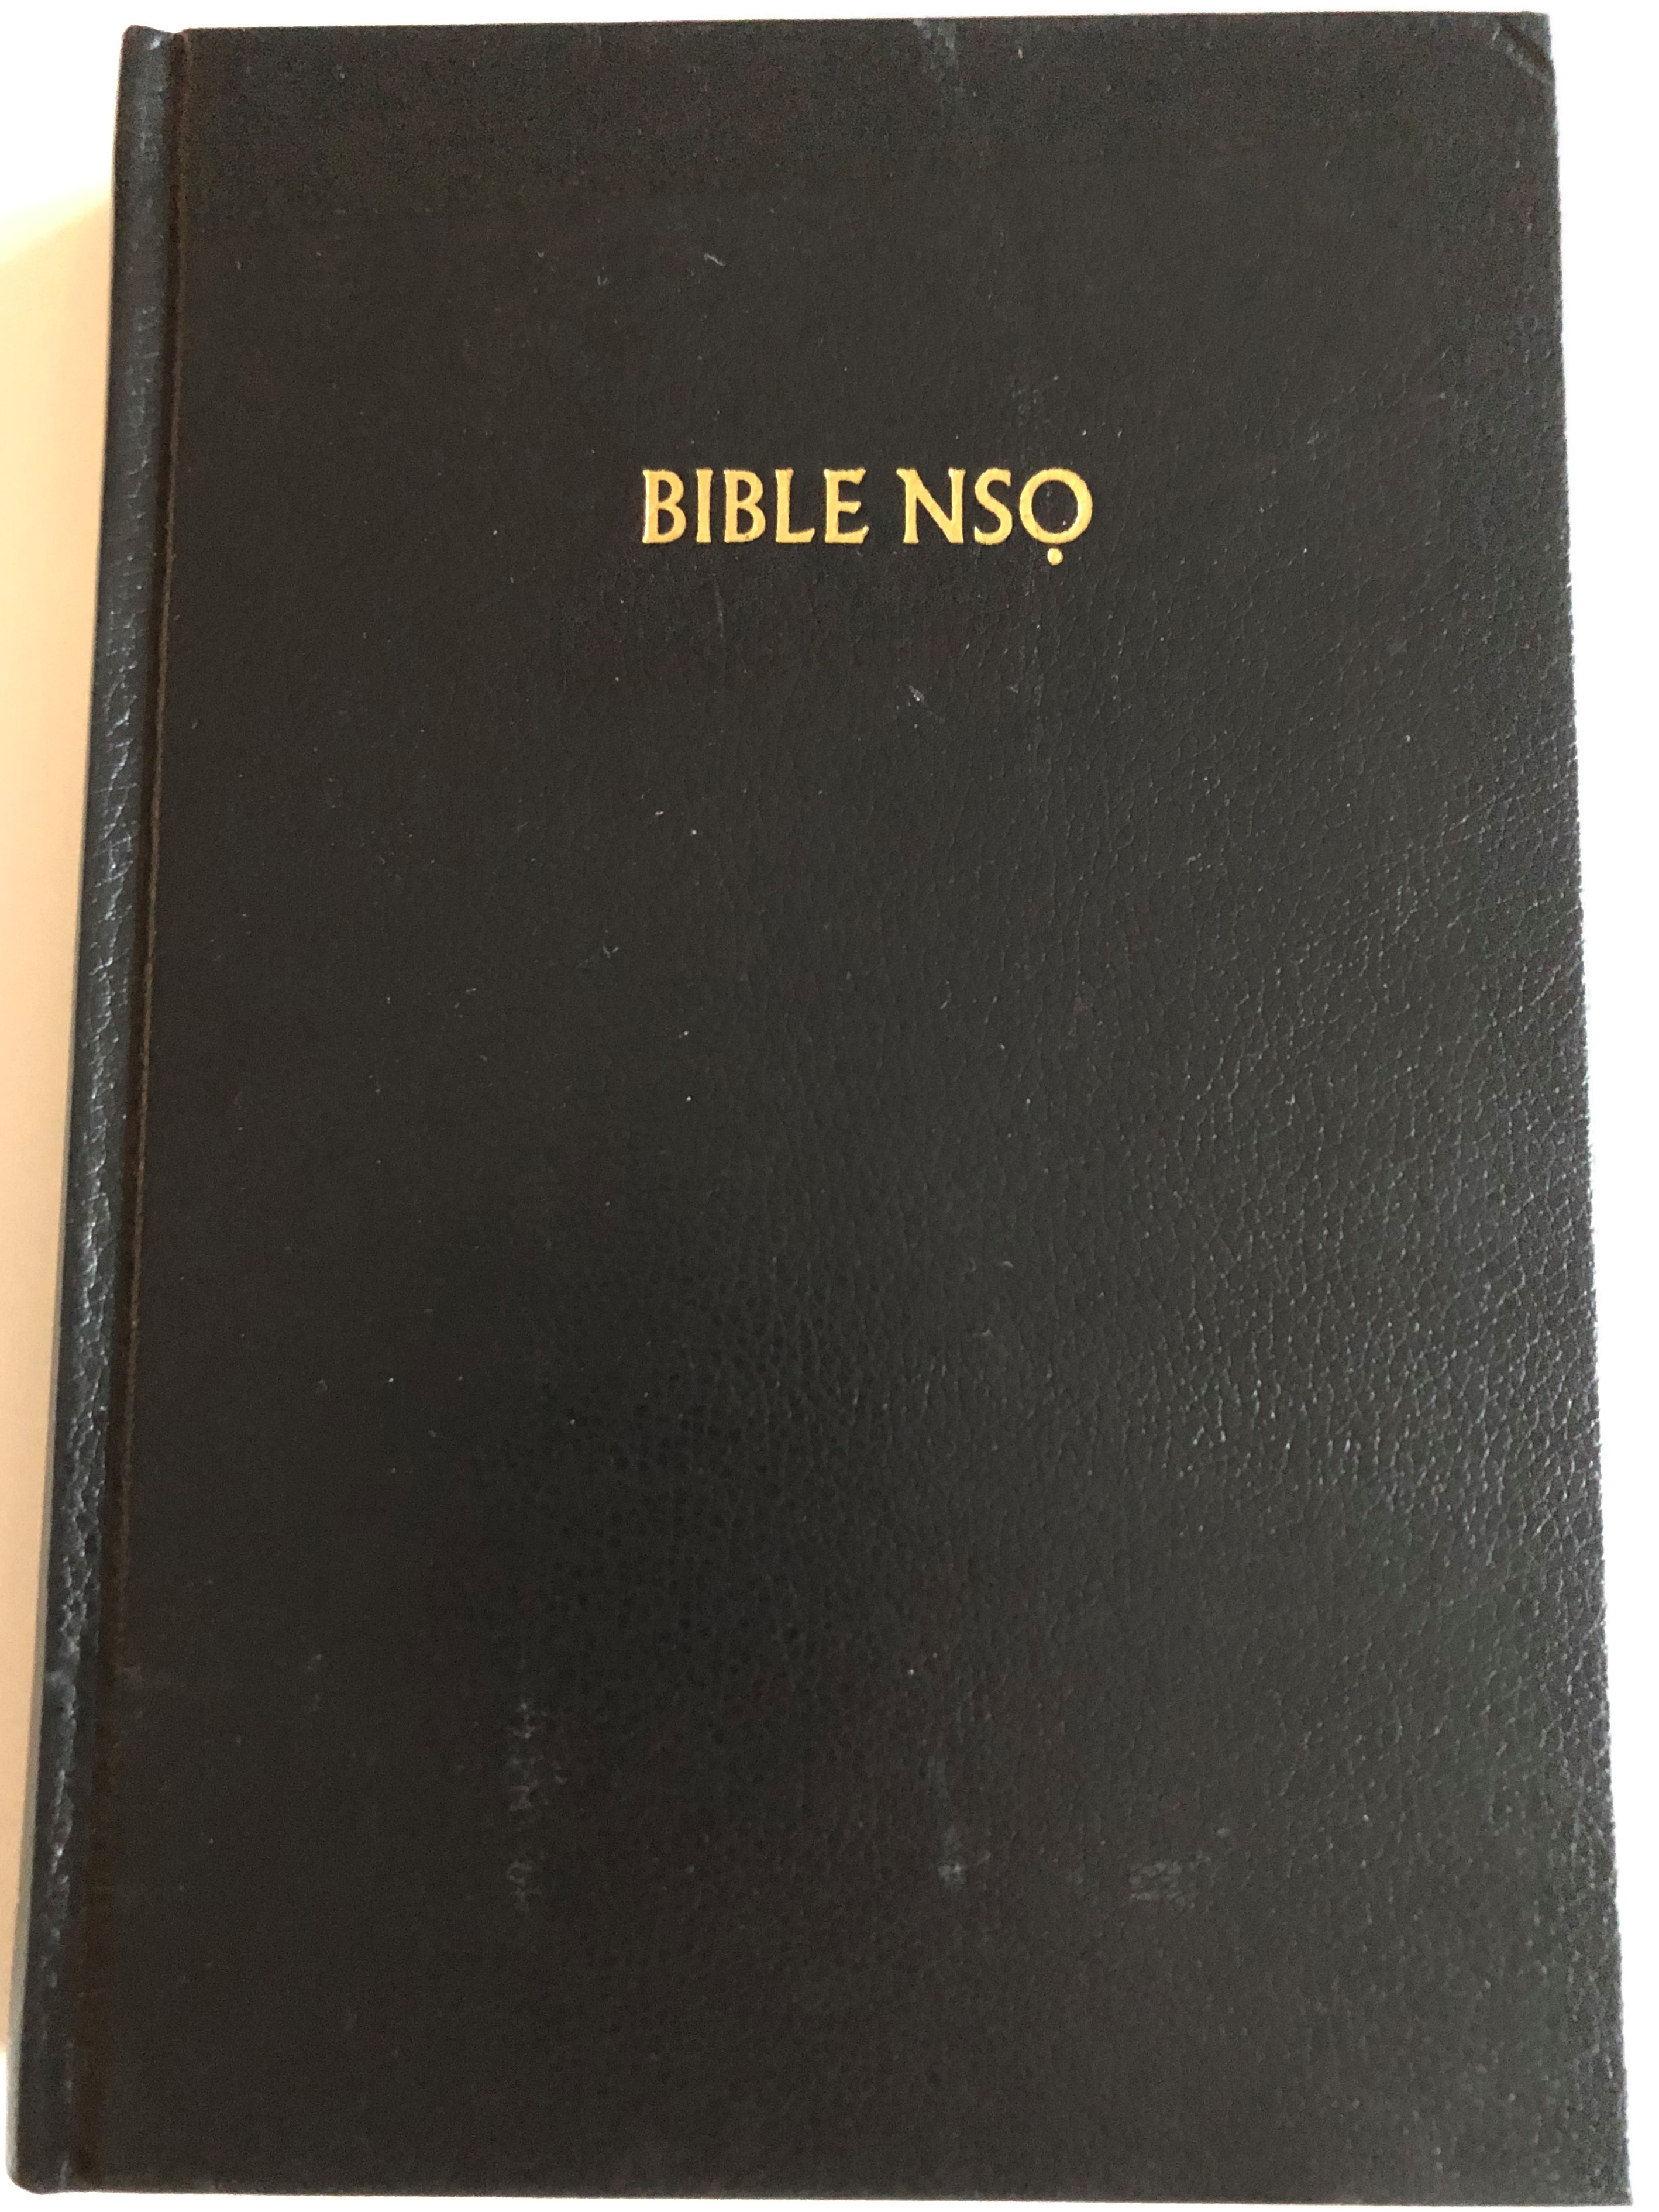 the-holy-bible-in-igbo-union-version-nigeria-bible-nsq-1.jpg